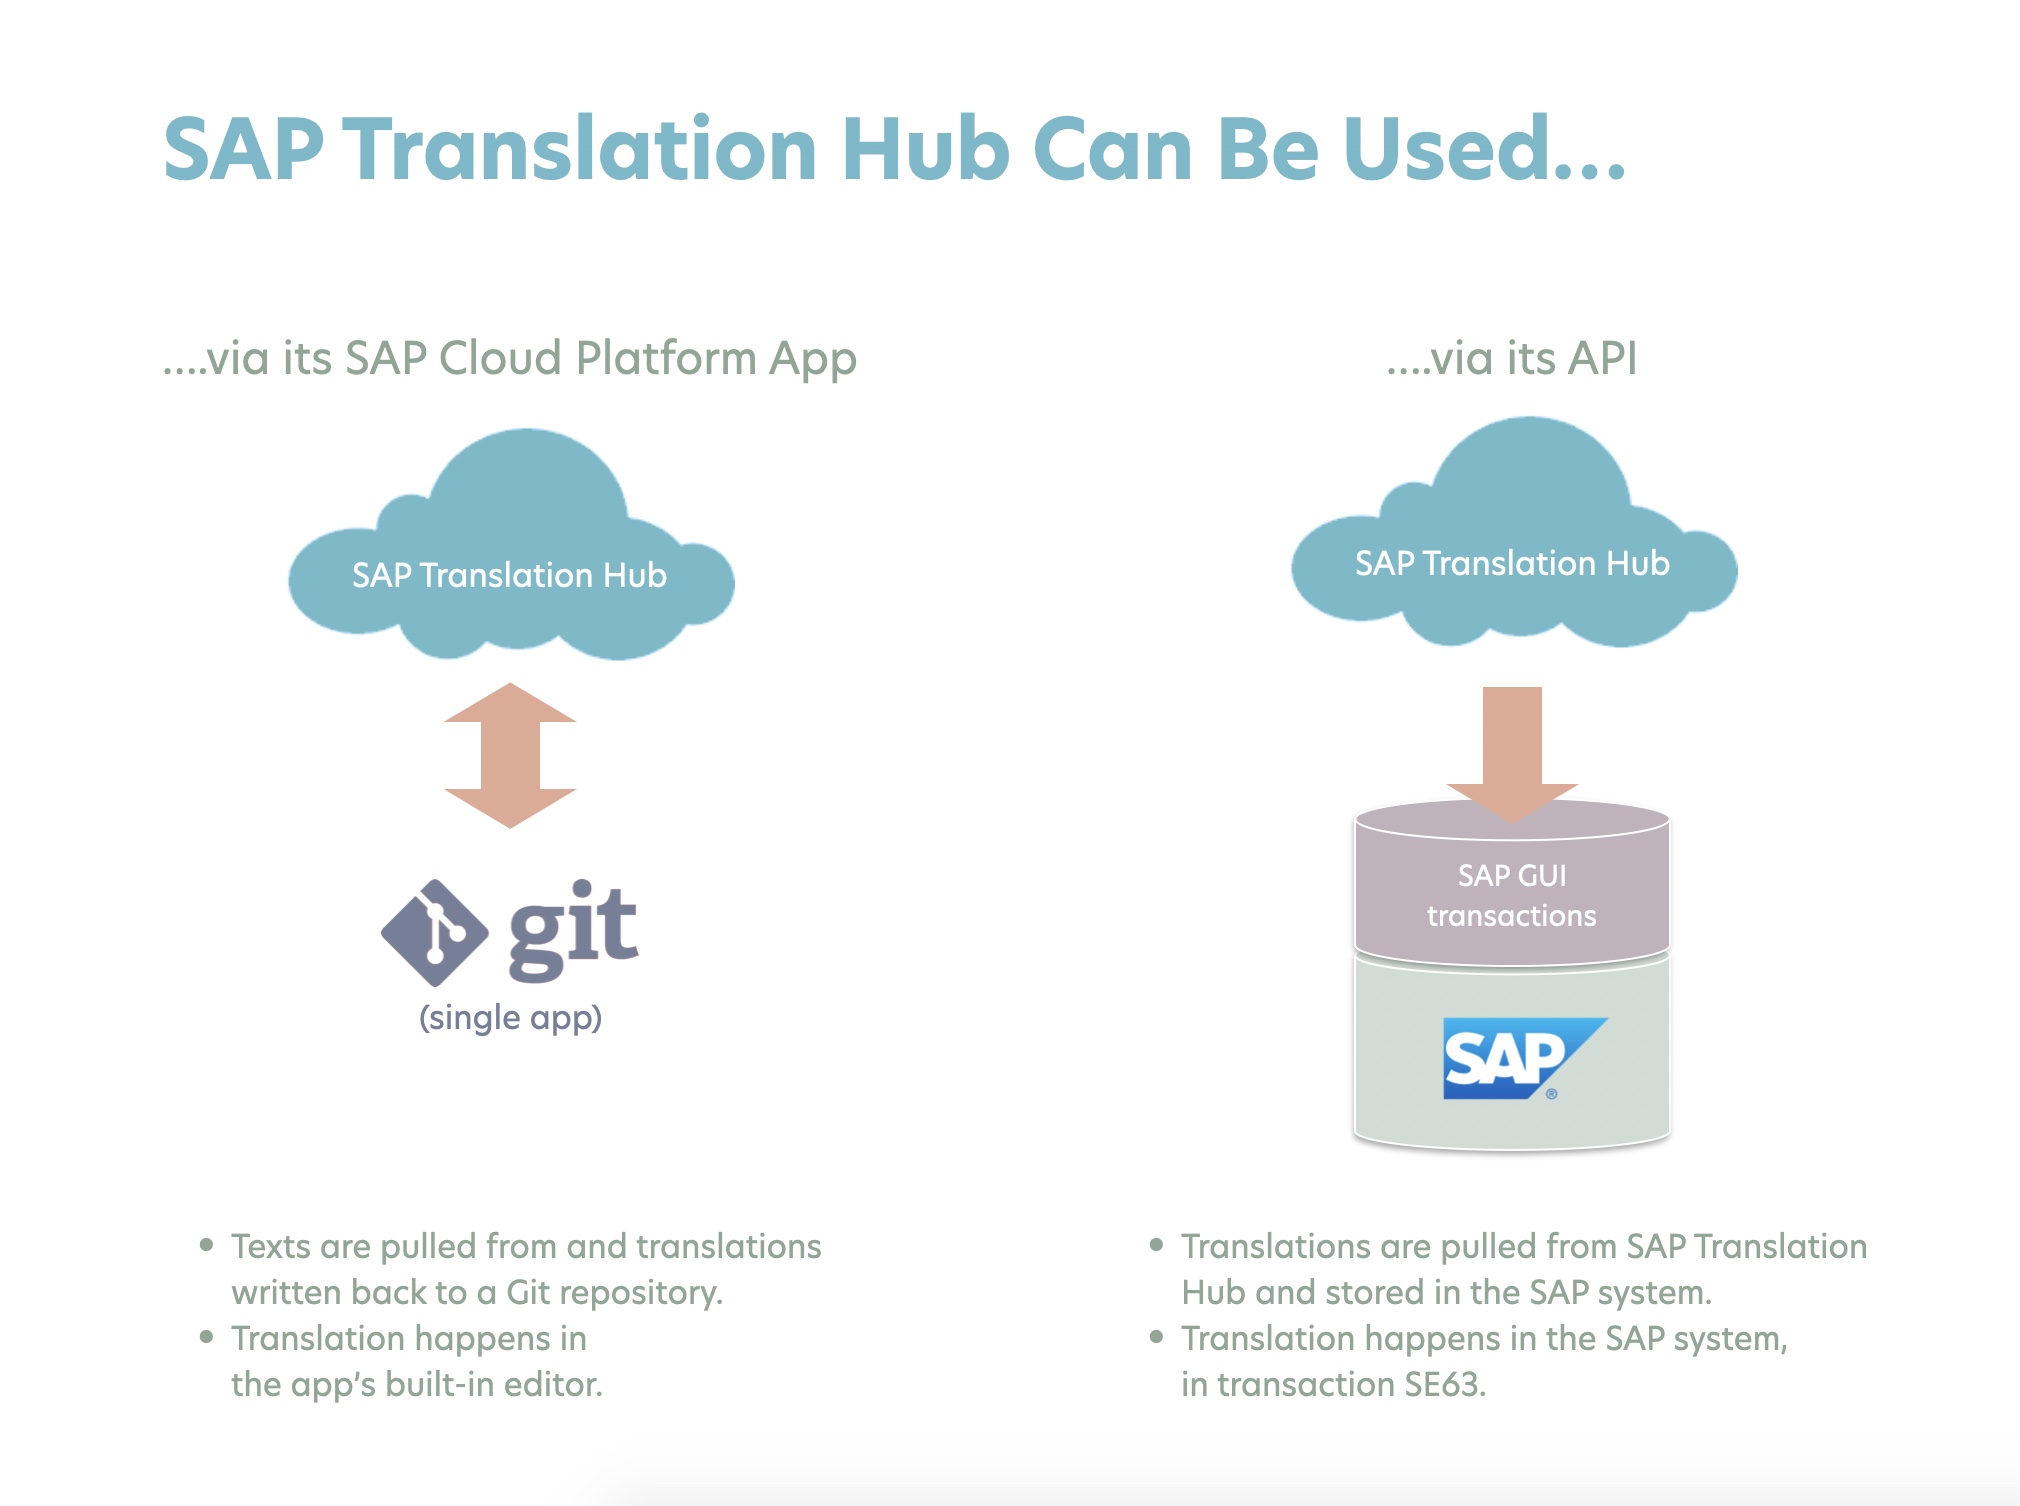 Using SAP Tranlation Hub via the UI or via its API.